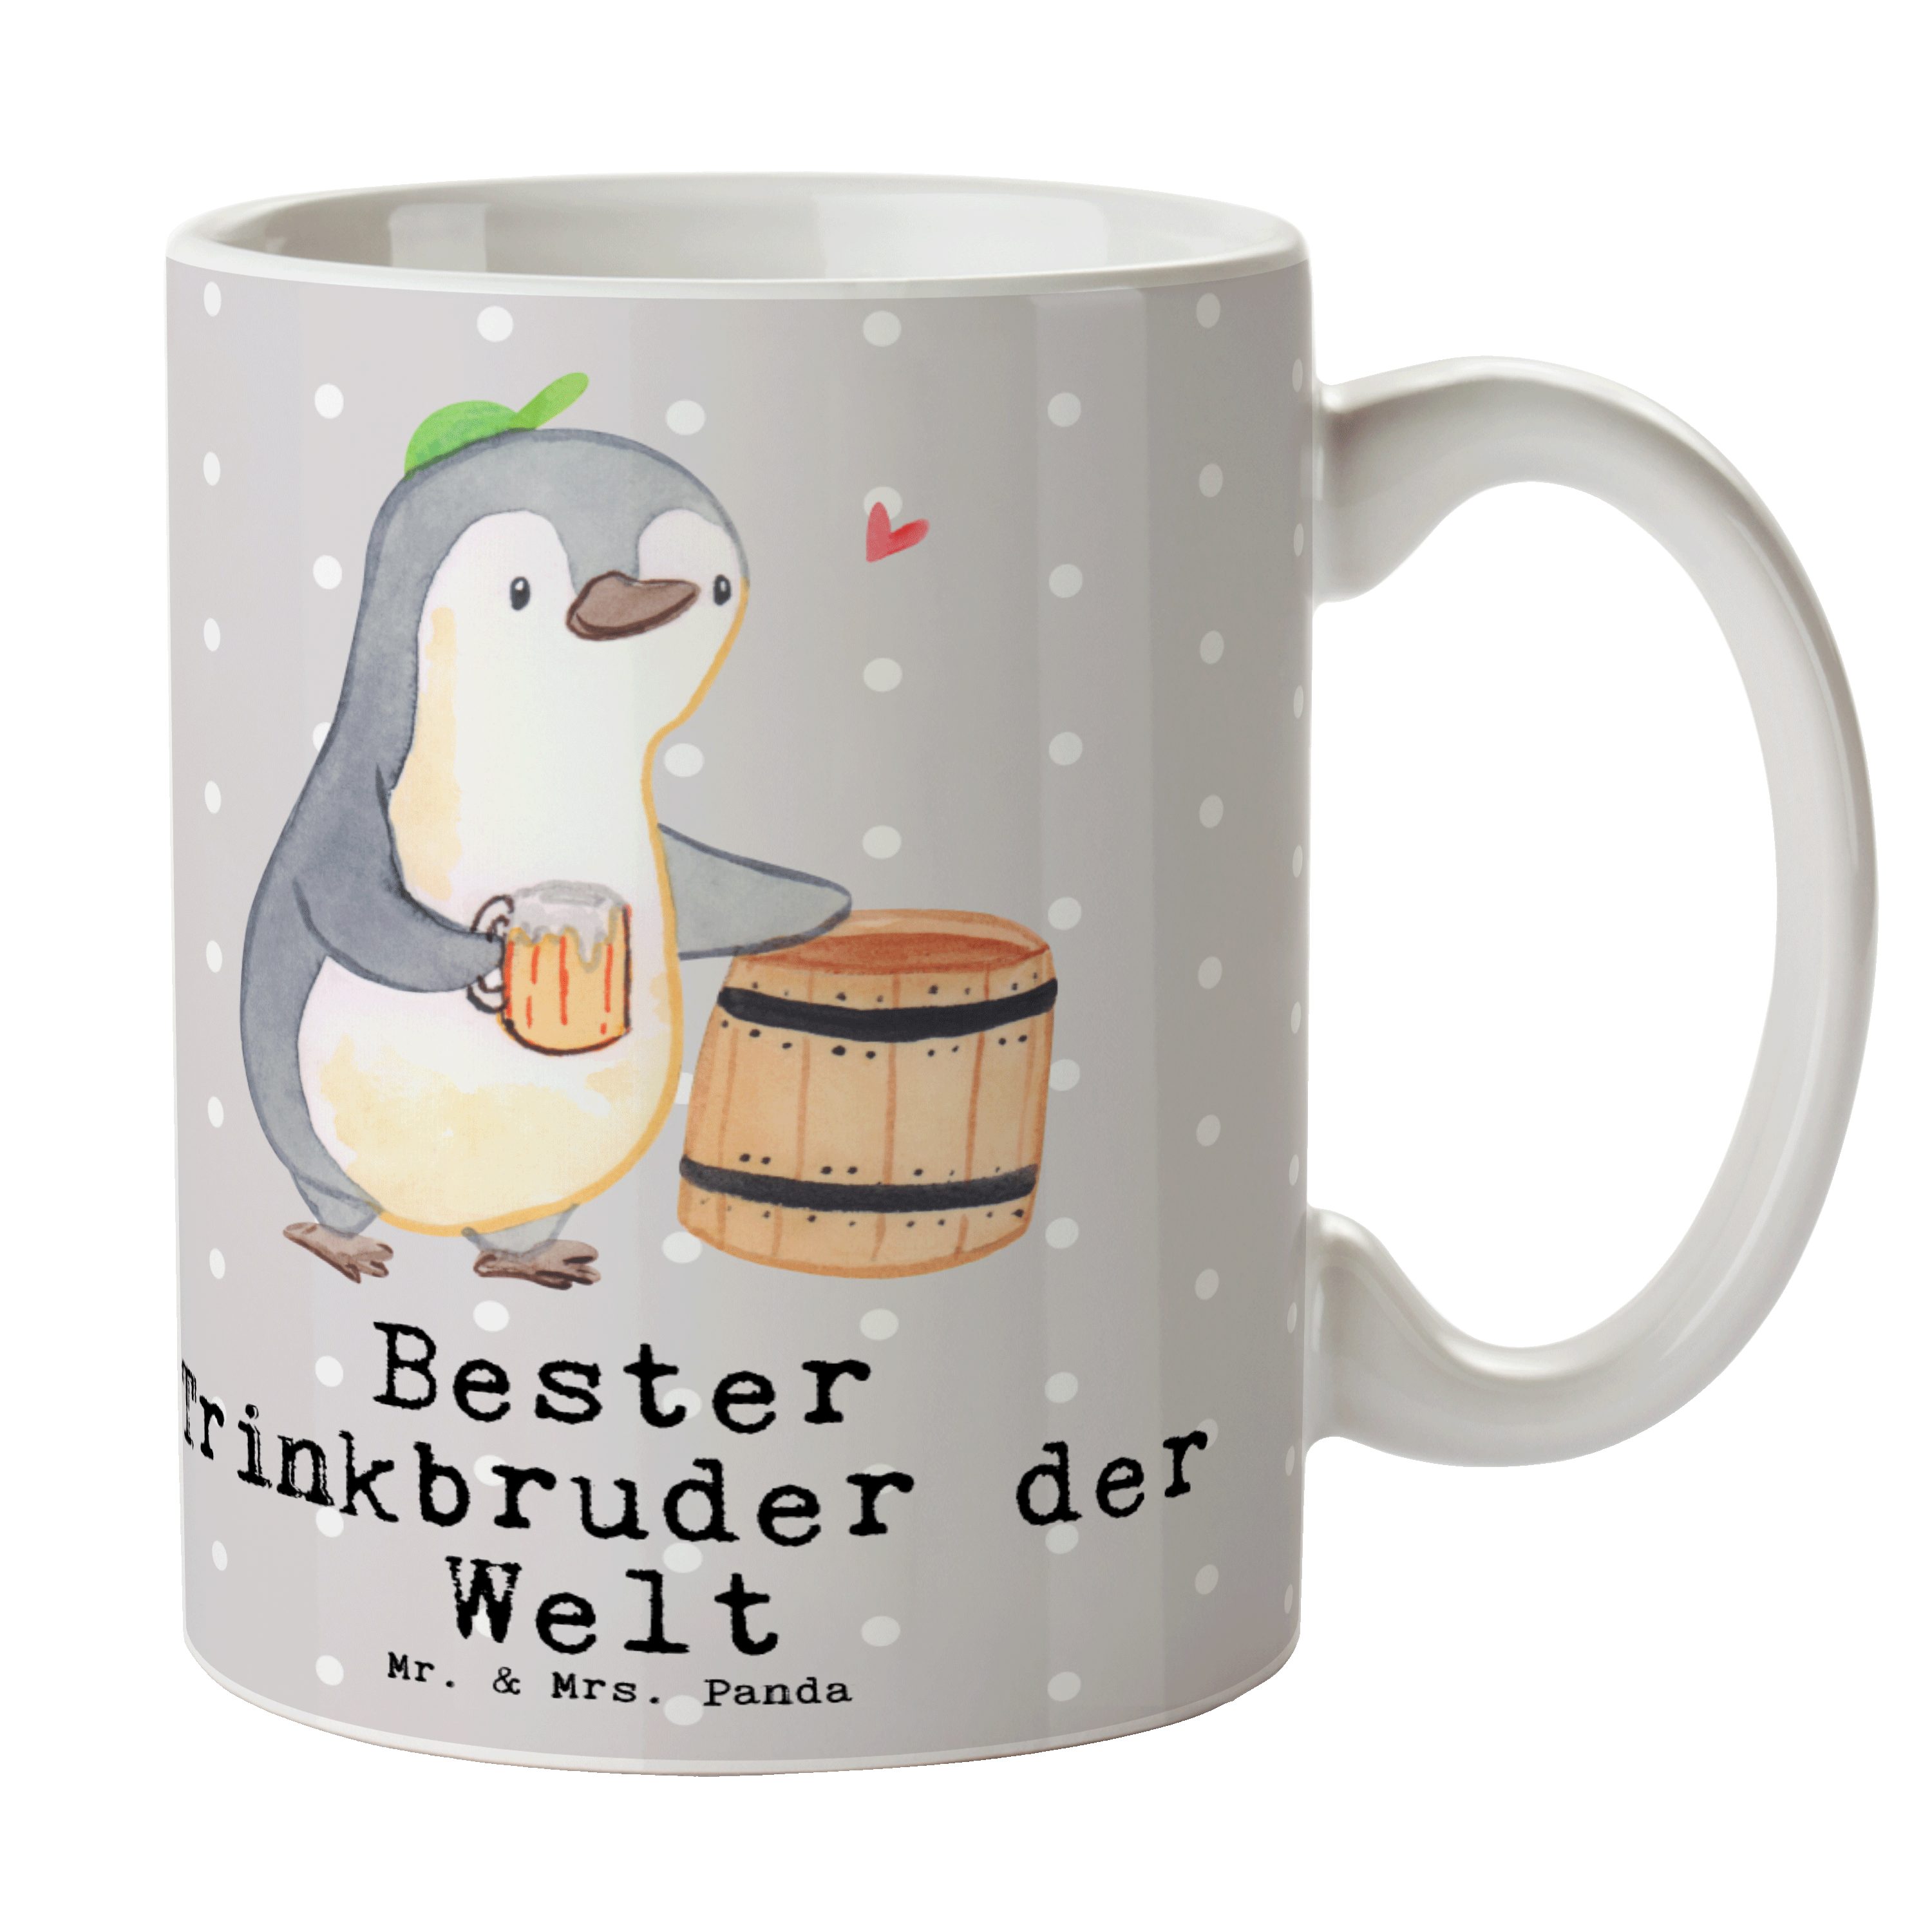 Mr. & Mrs. Panda Tasse Pinguin Bester Trinkbruder der Welt - Grau Pastell - Geschenk, Becher, Keramik